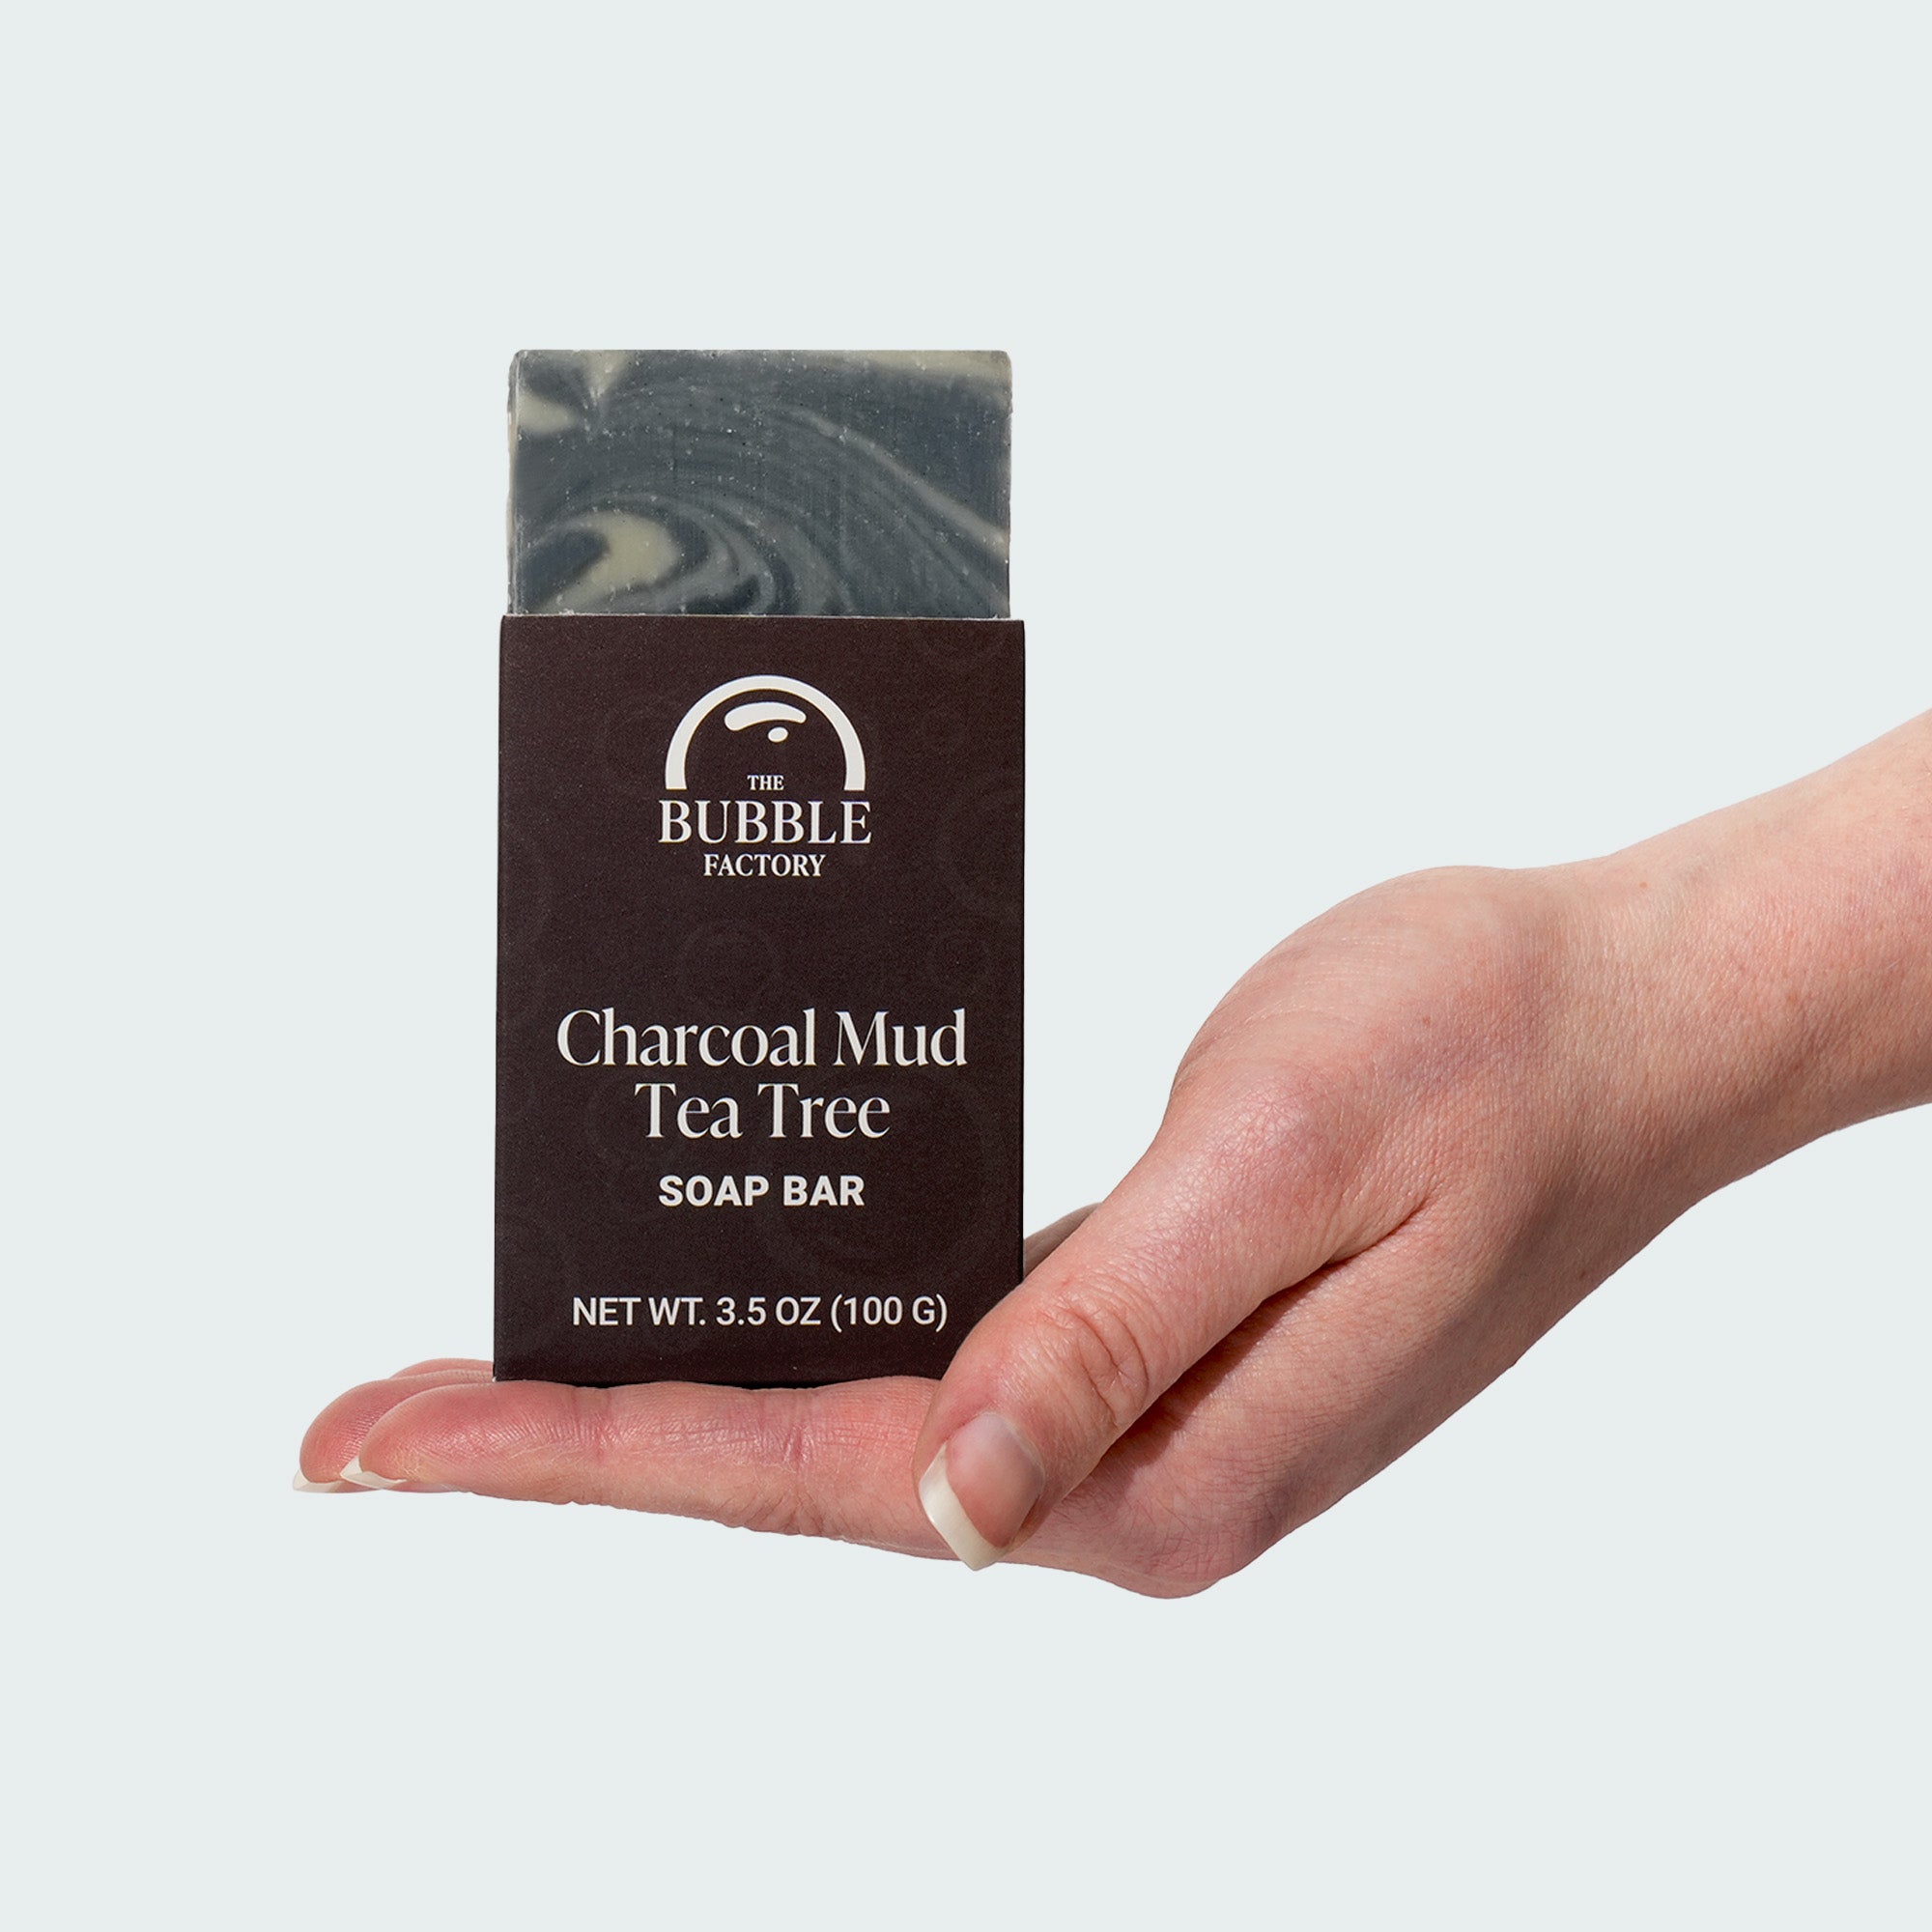 Hand holding a bar of charcoal mud tea tree soap